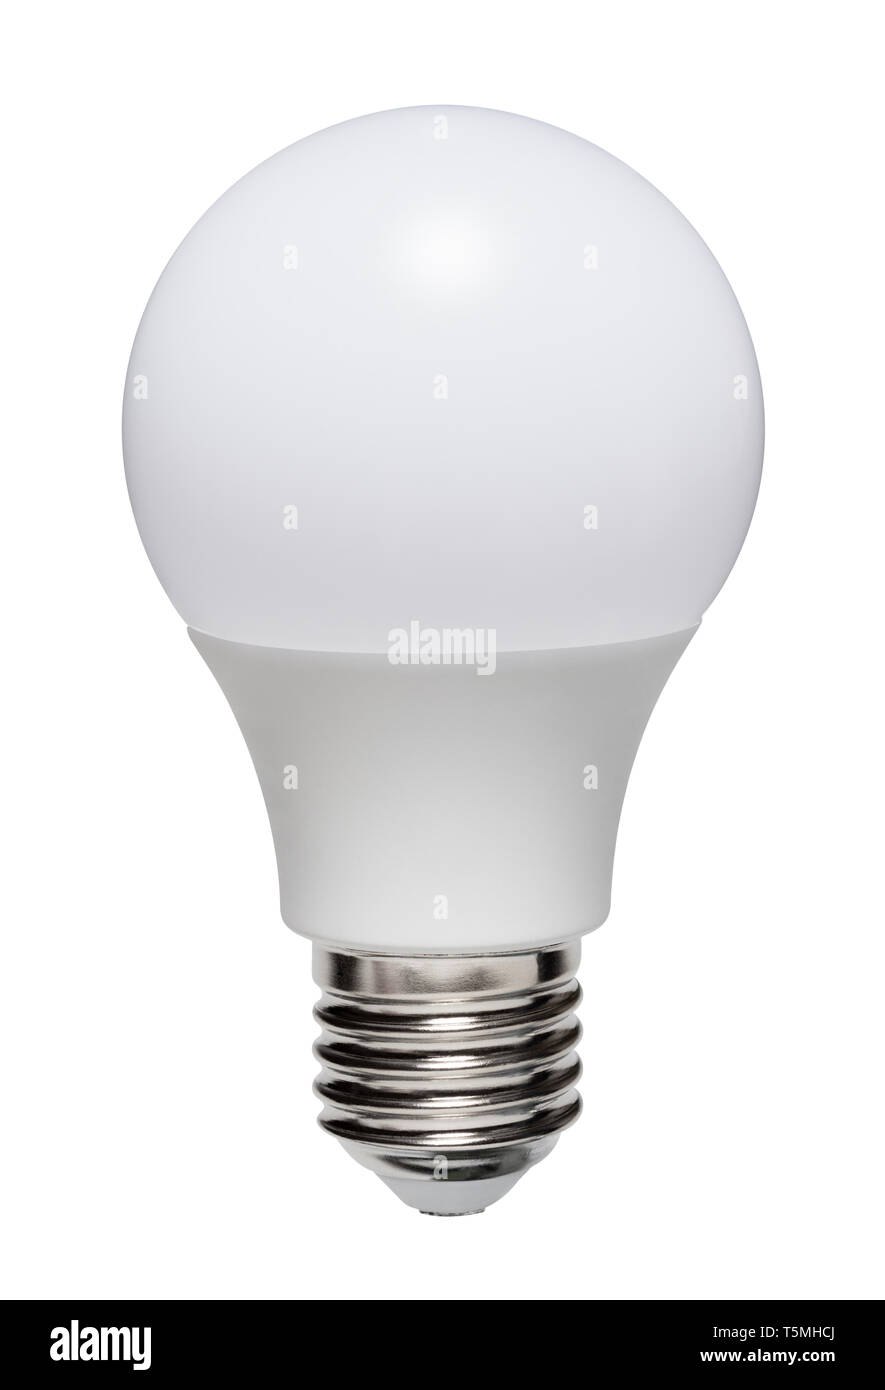 LED light bulb lamp with E27 socket Stock Photo